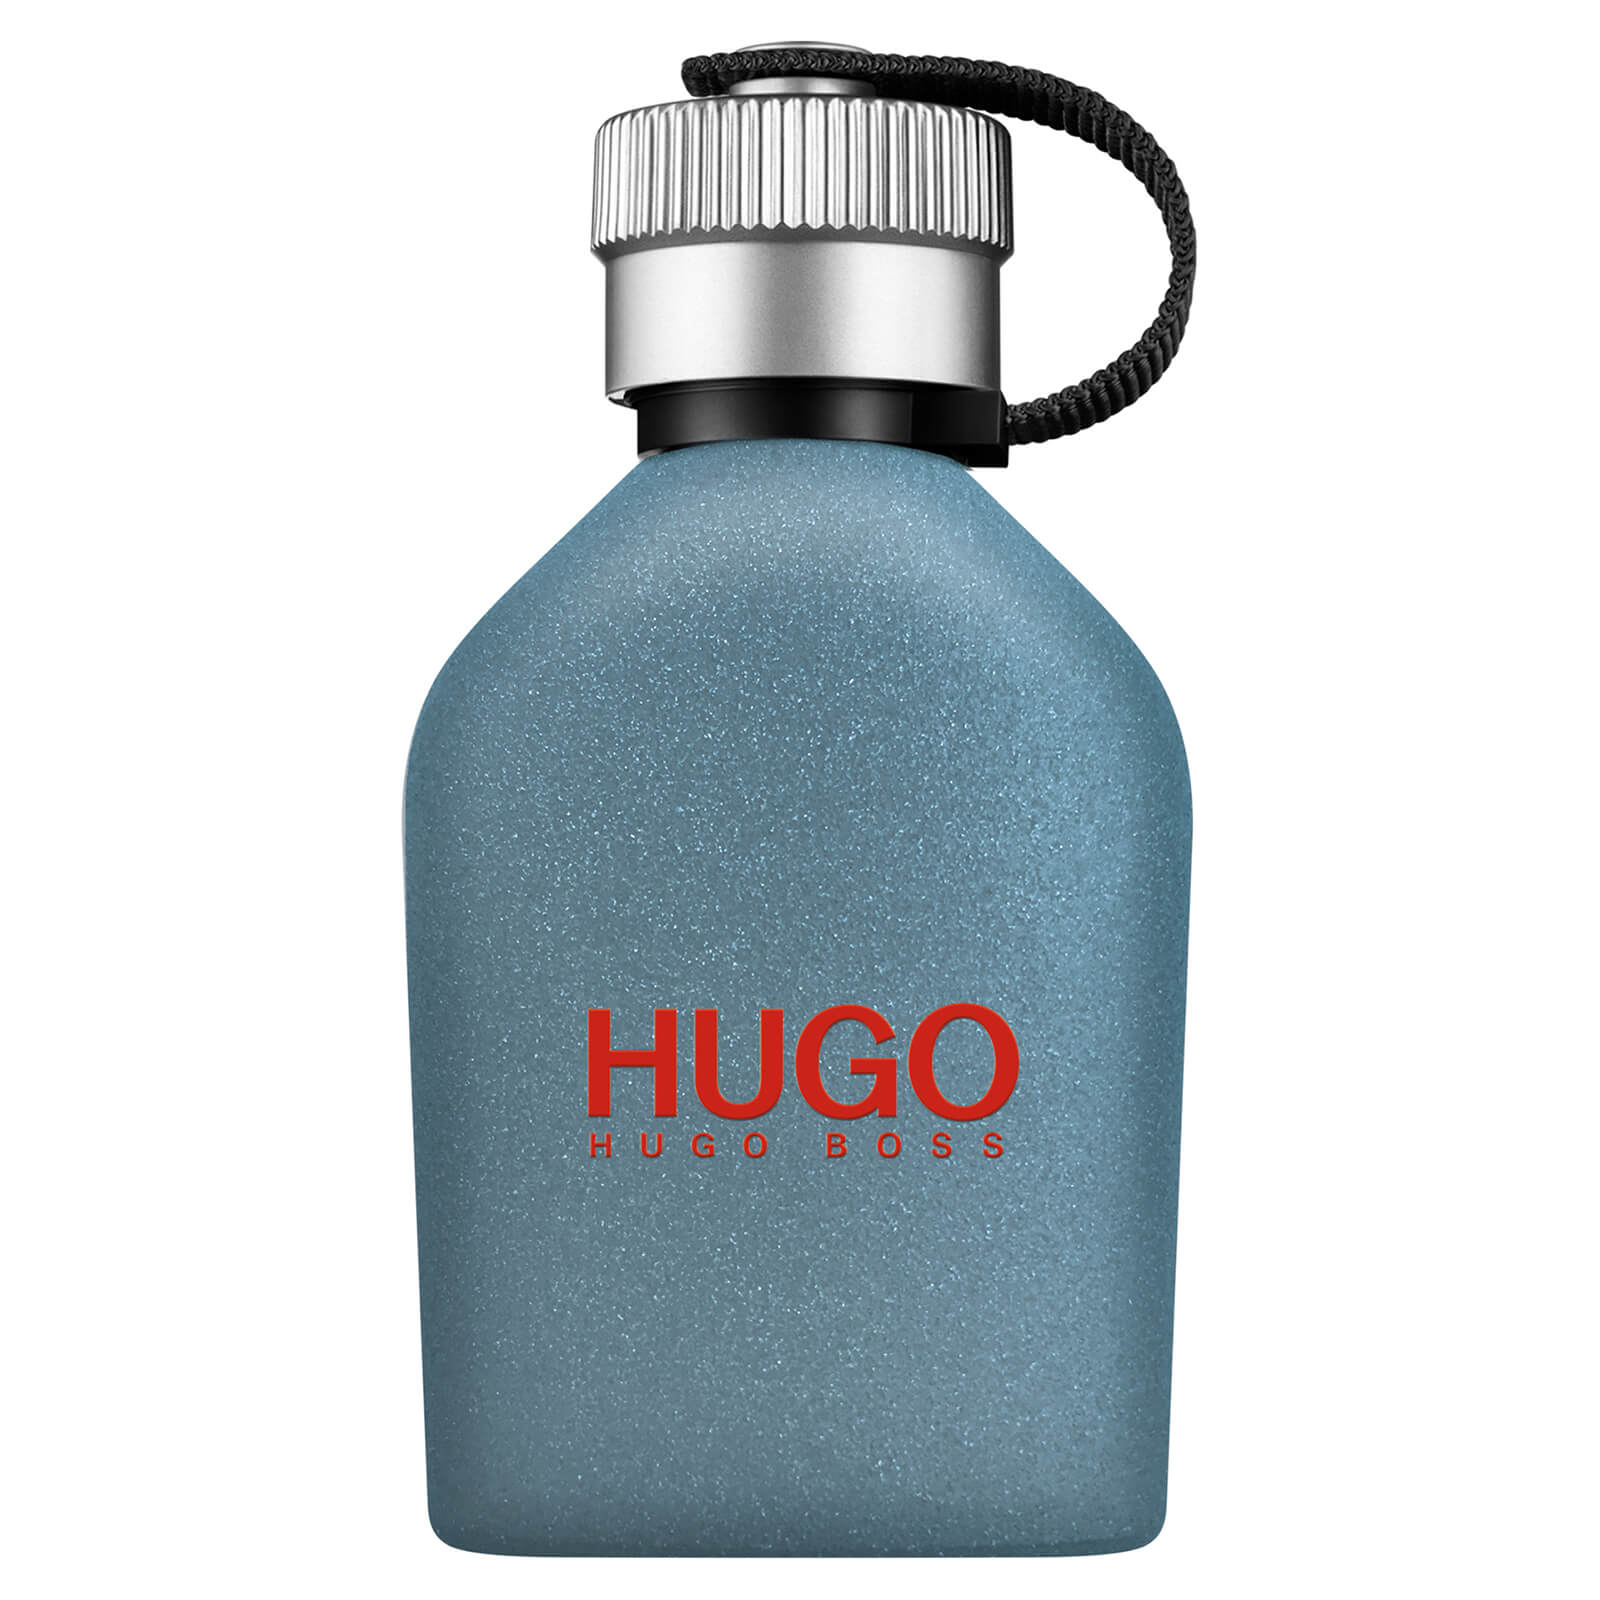 limited edition hugo boss